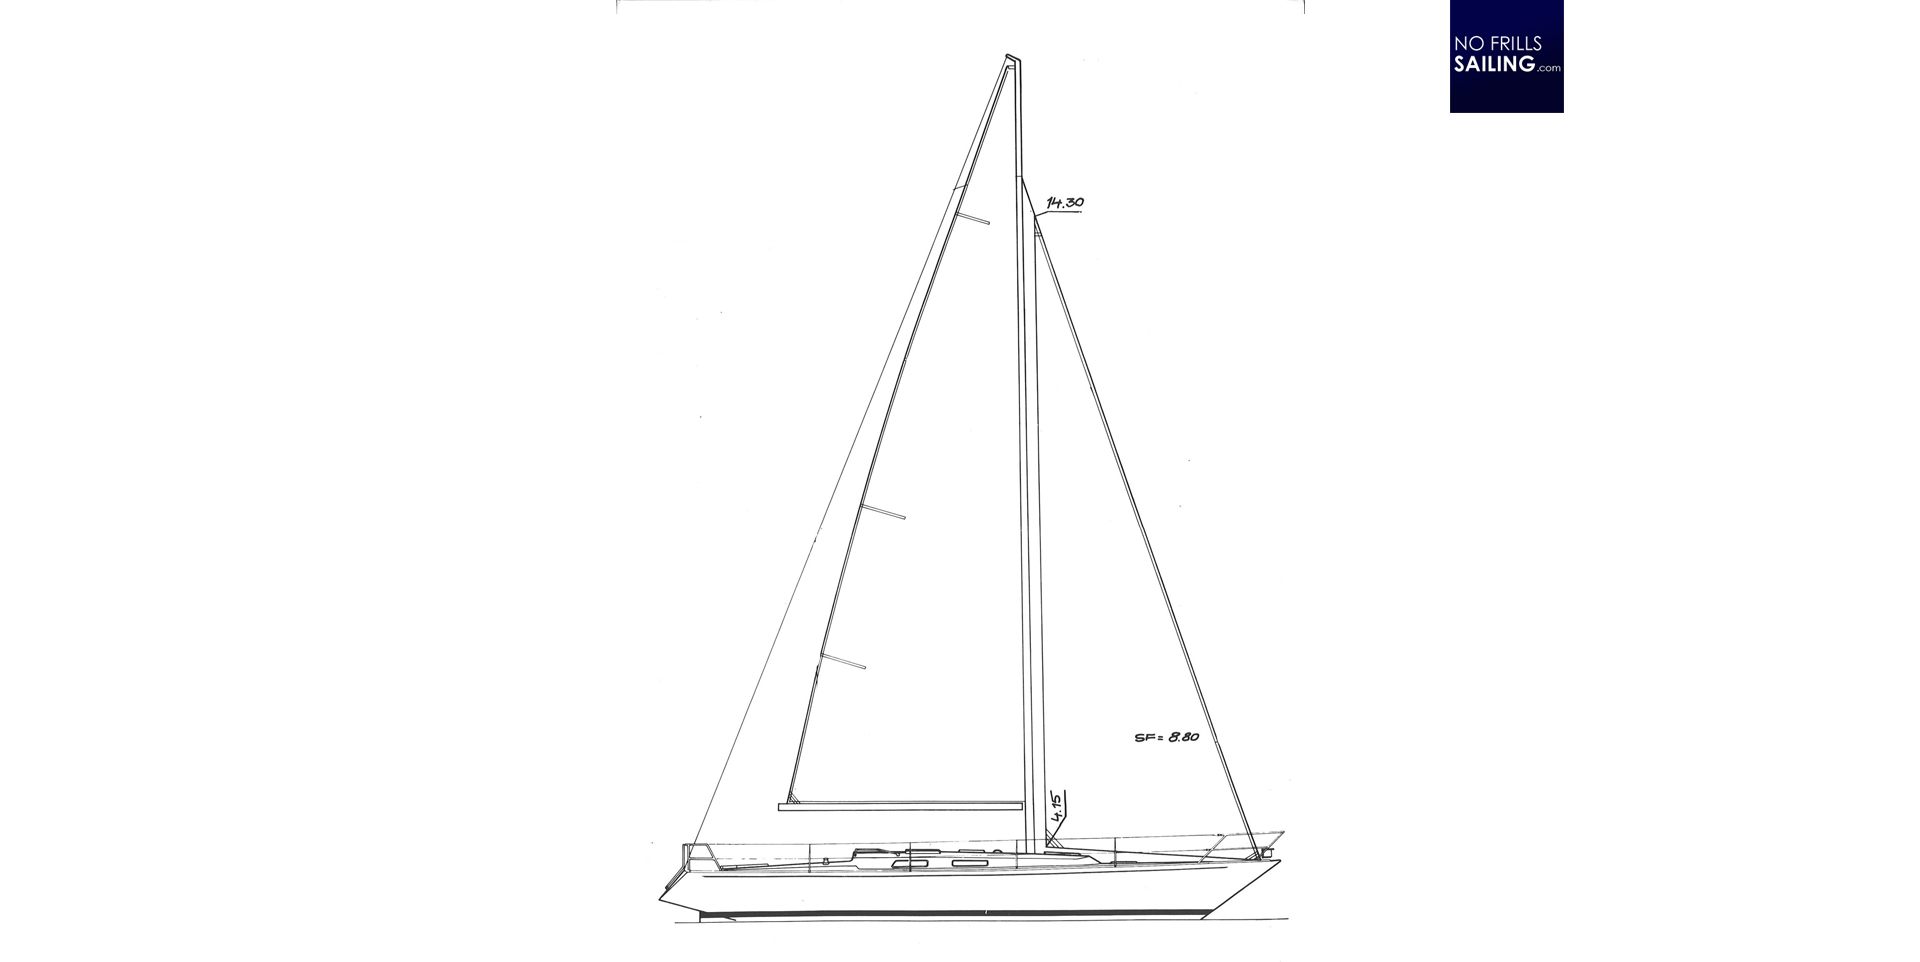 omega 34 sailboat data